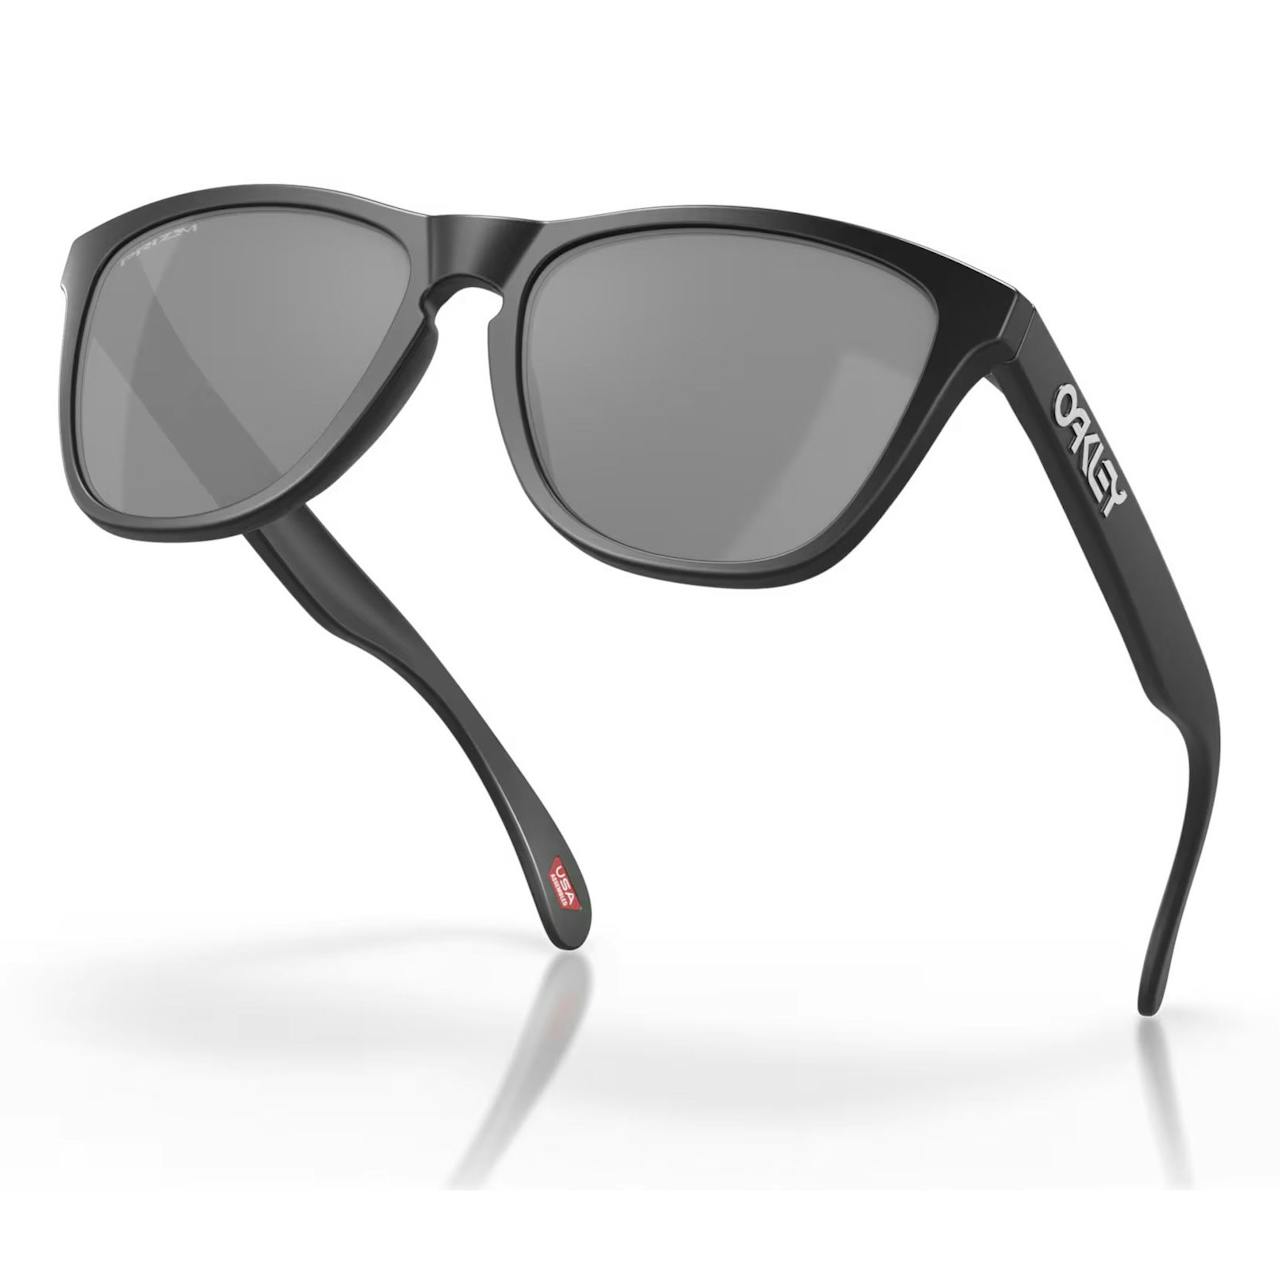 Oakley Frogskins Sunglasses - Matte Black / Prizm Black Polarized, Sunglasses